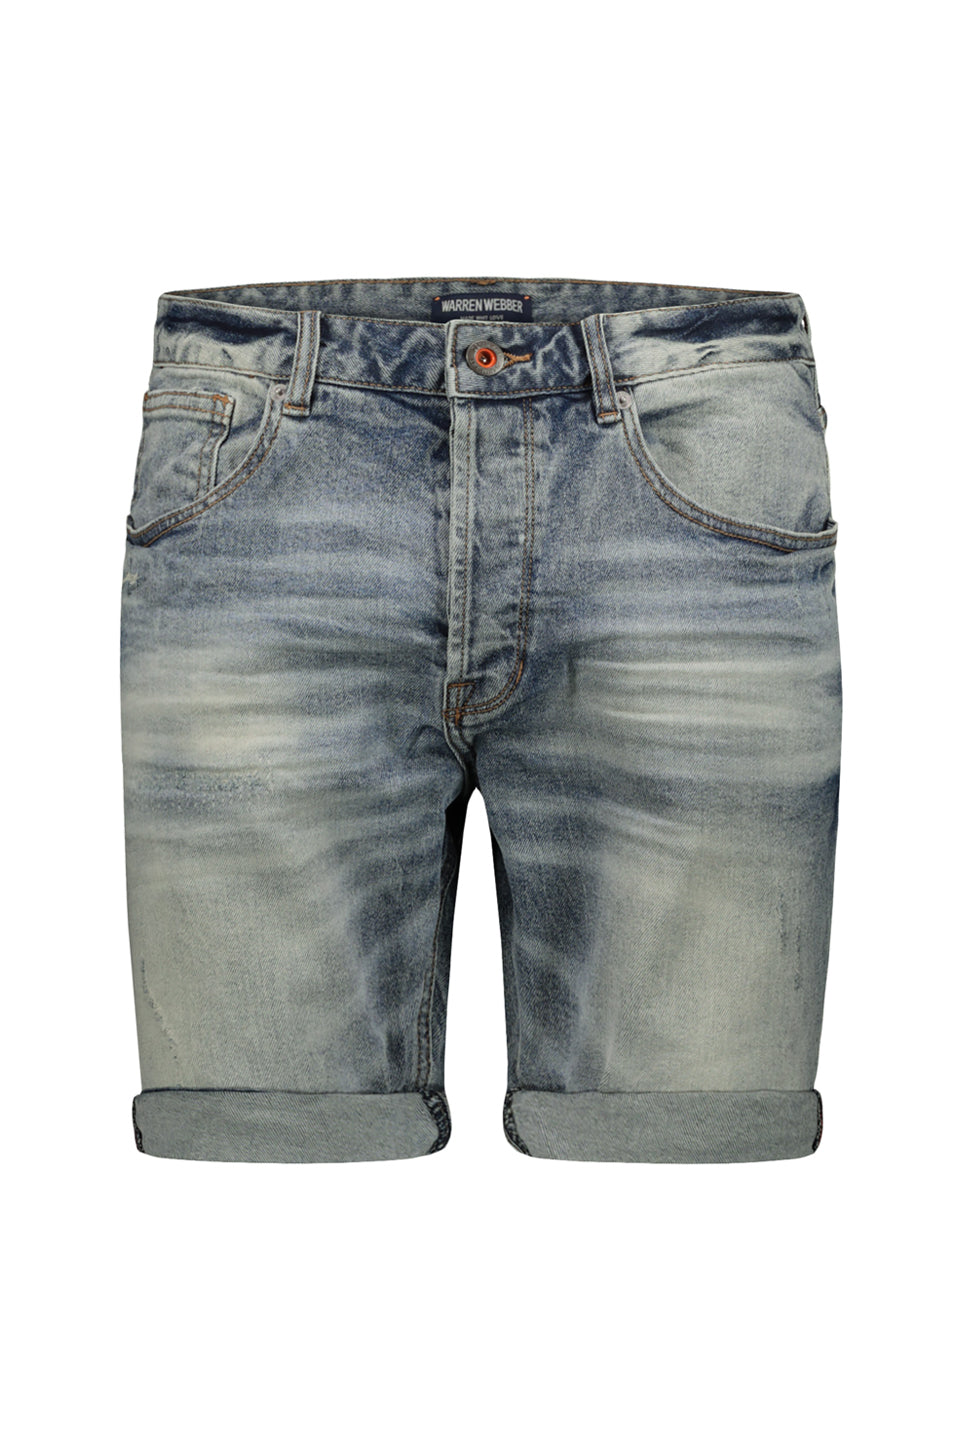 Acid Wash Blue Jean Shorts